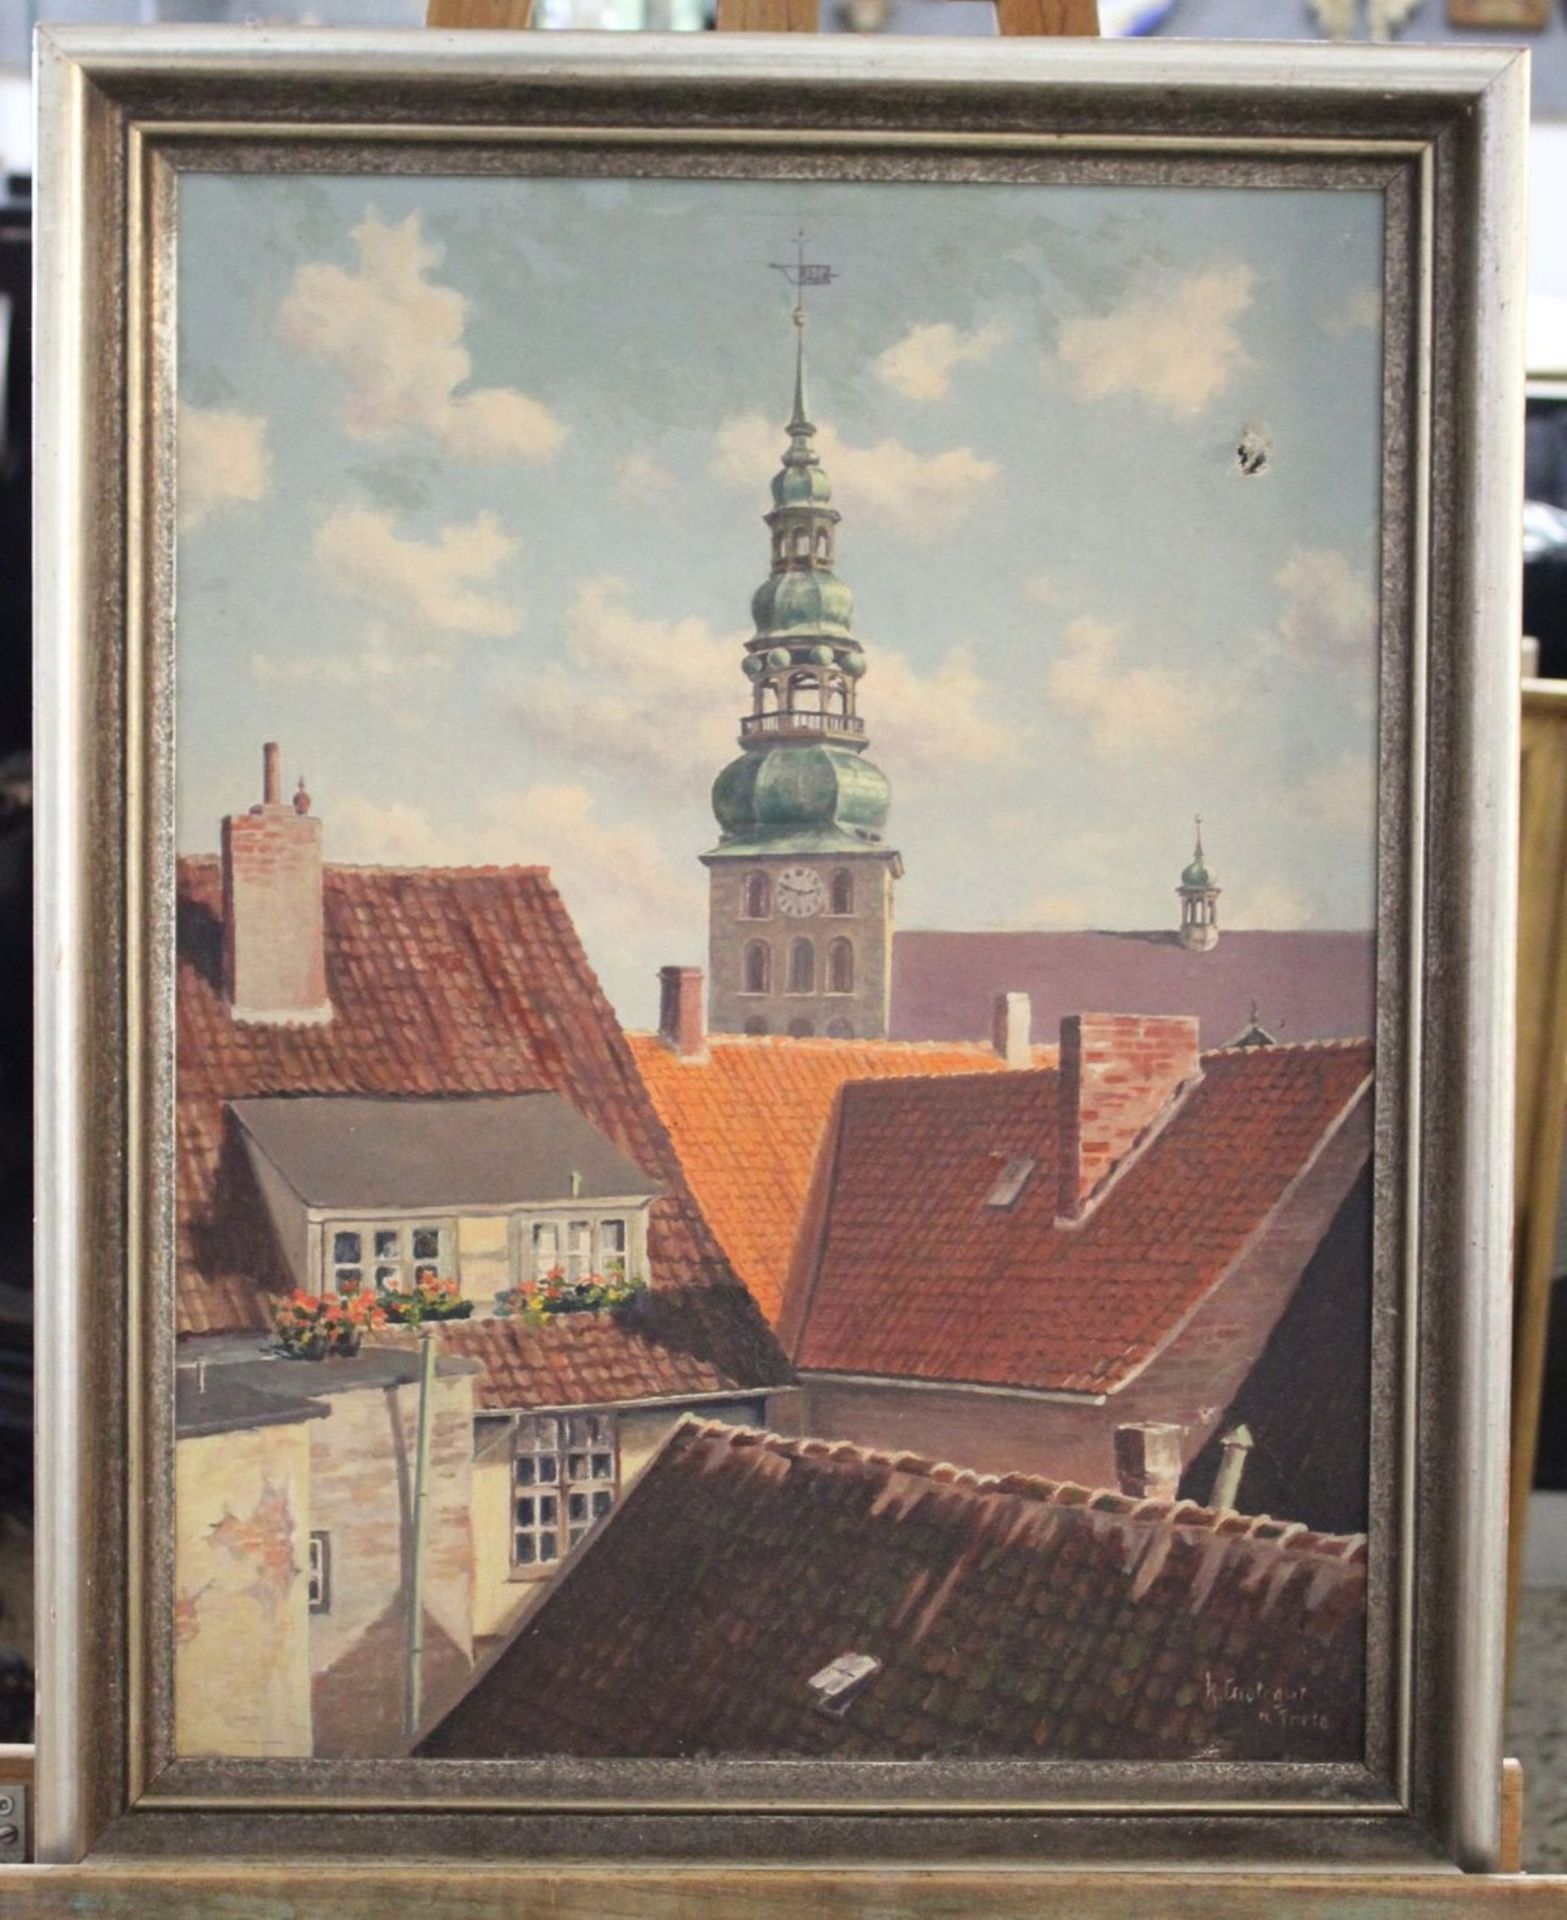 Herbert Grotegut(XX), Blick über Dächer, Öl/Leinwand, Leinwand mit Loch, restaurierungs bedürftig, - Bild 4 aus 5